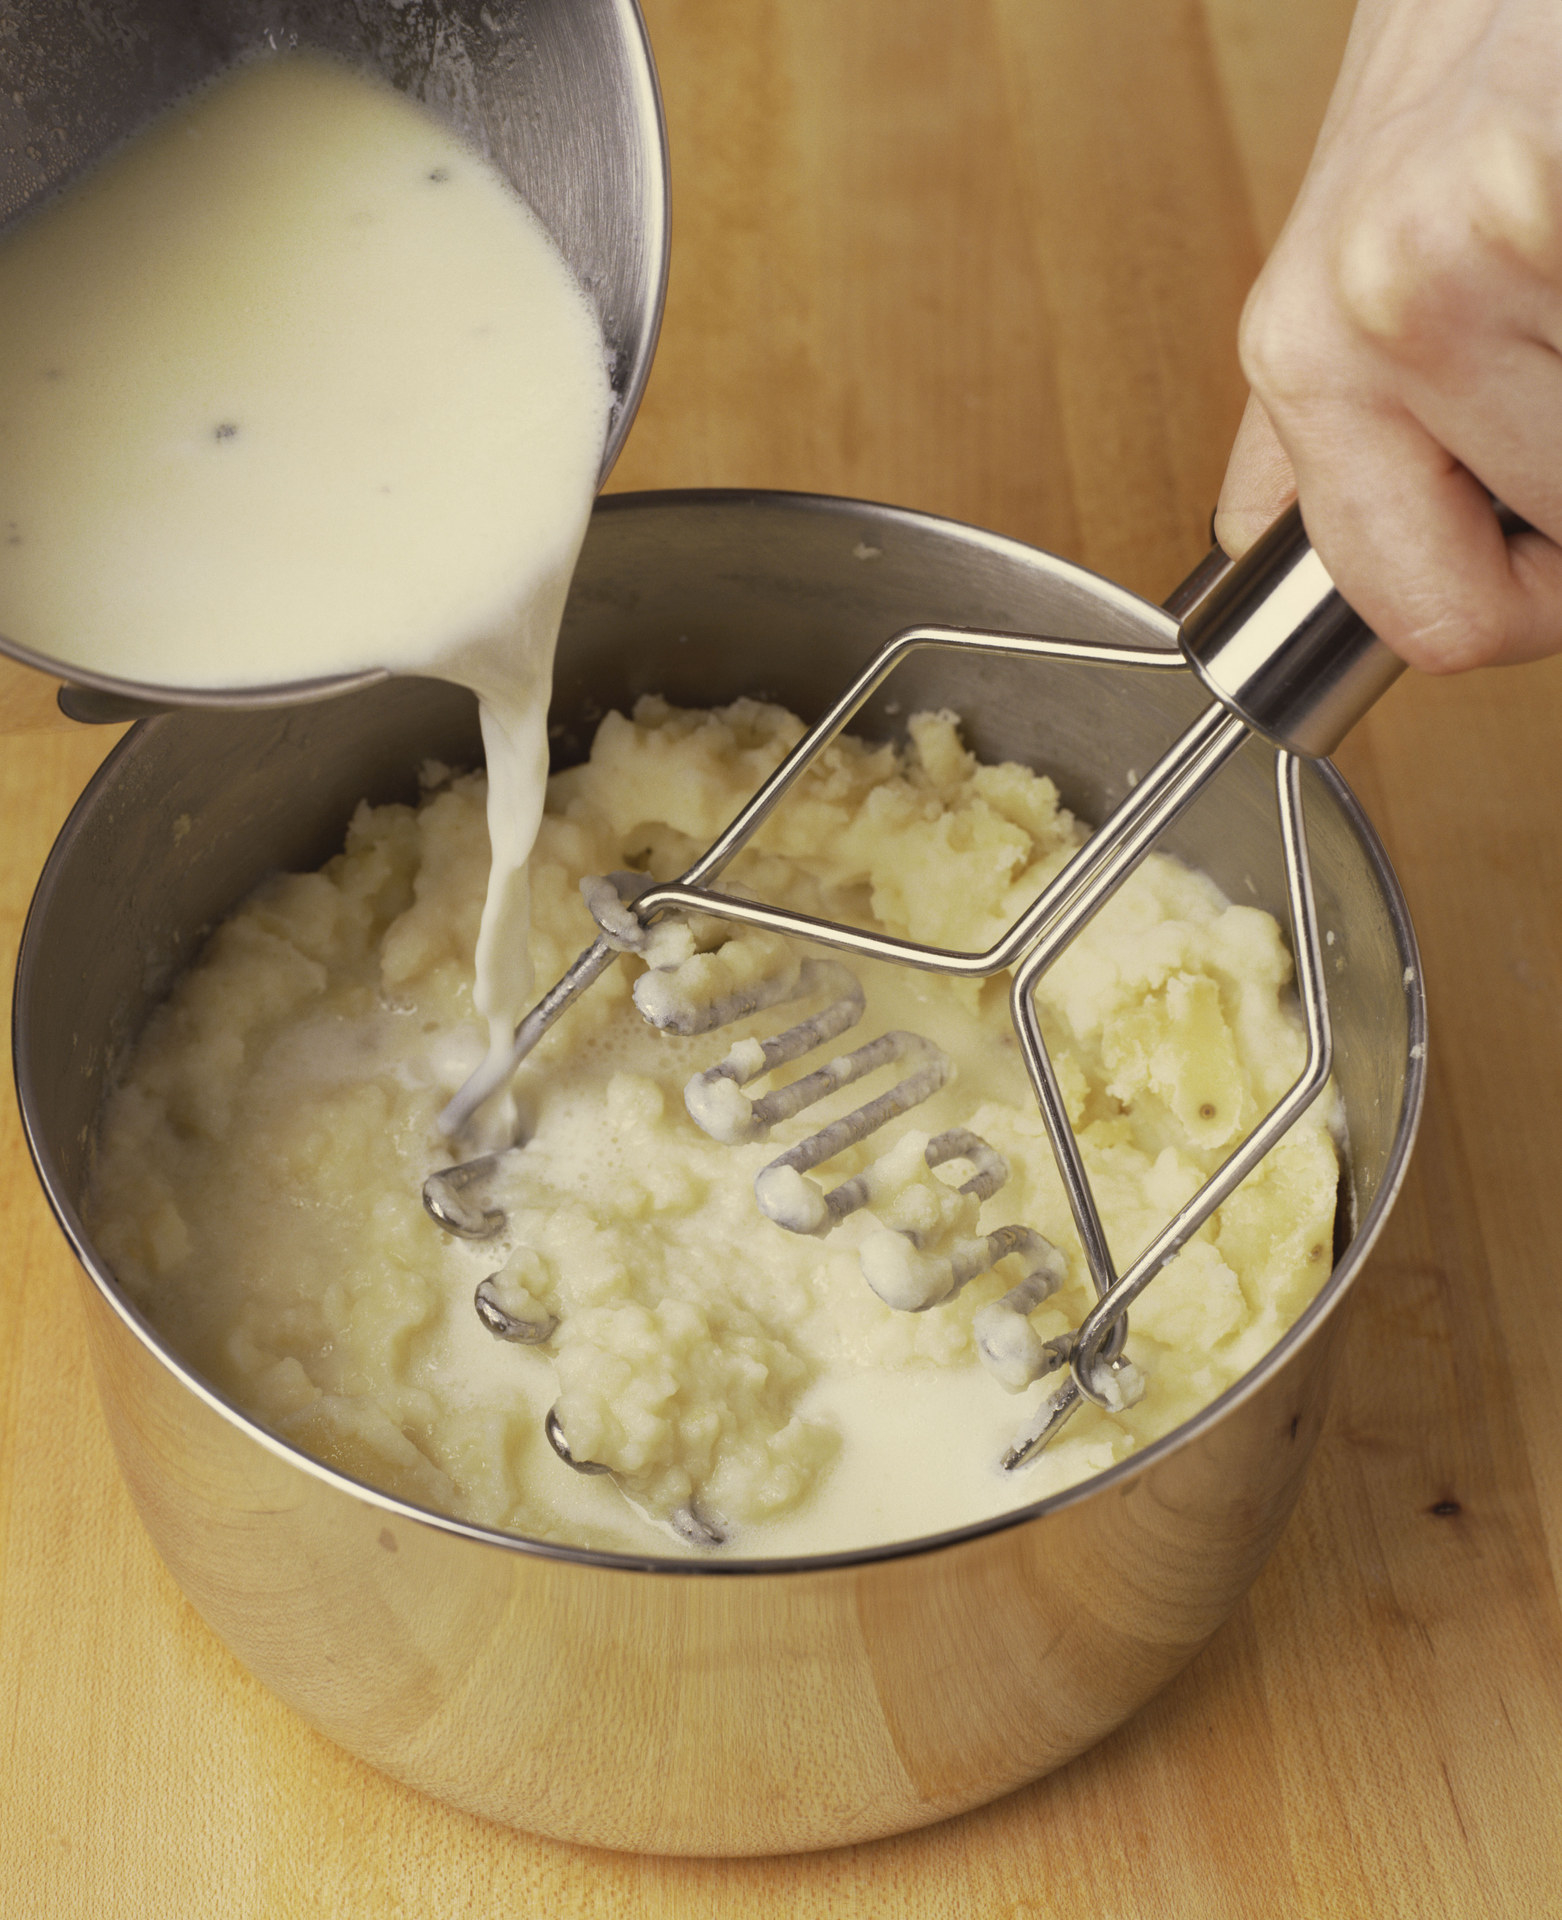 Someone making mashed potatoes